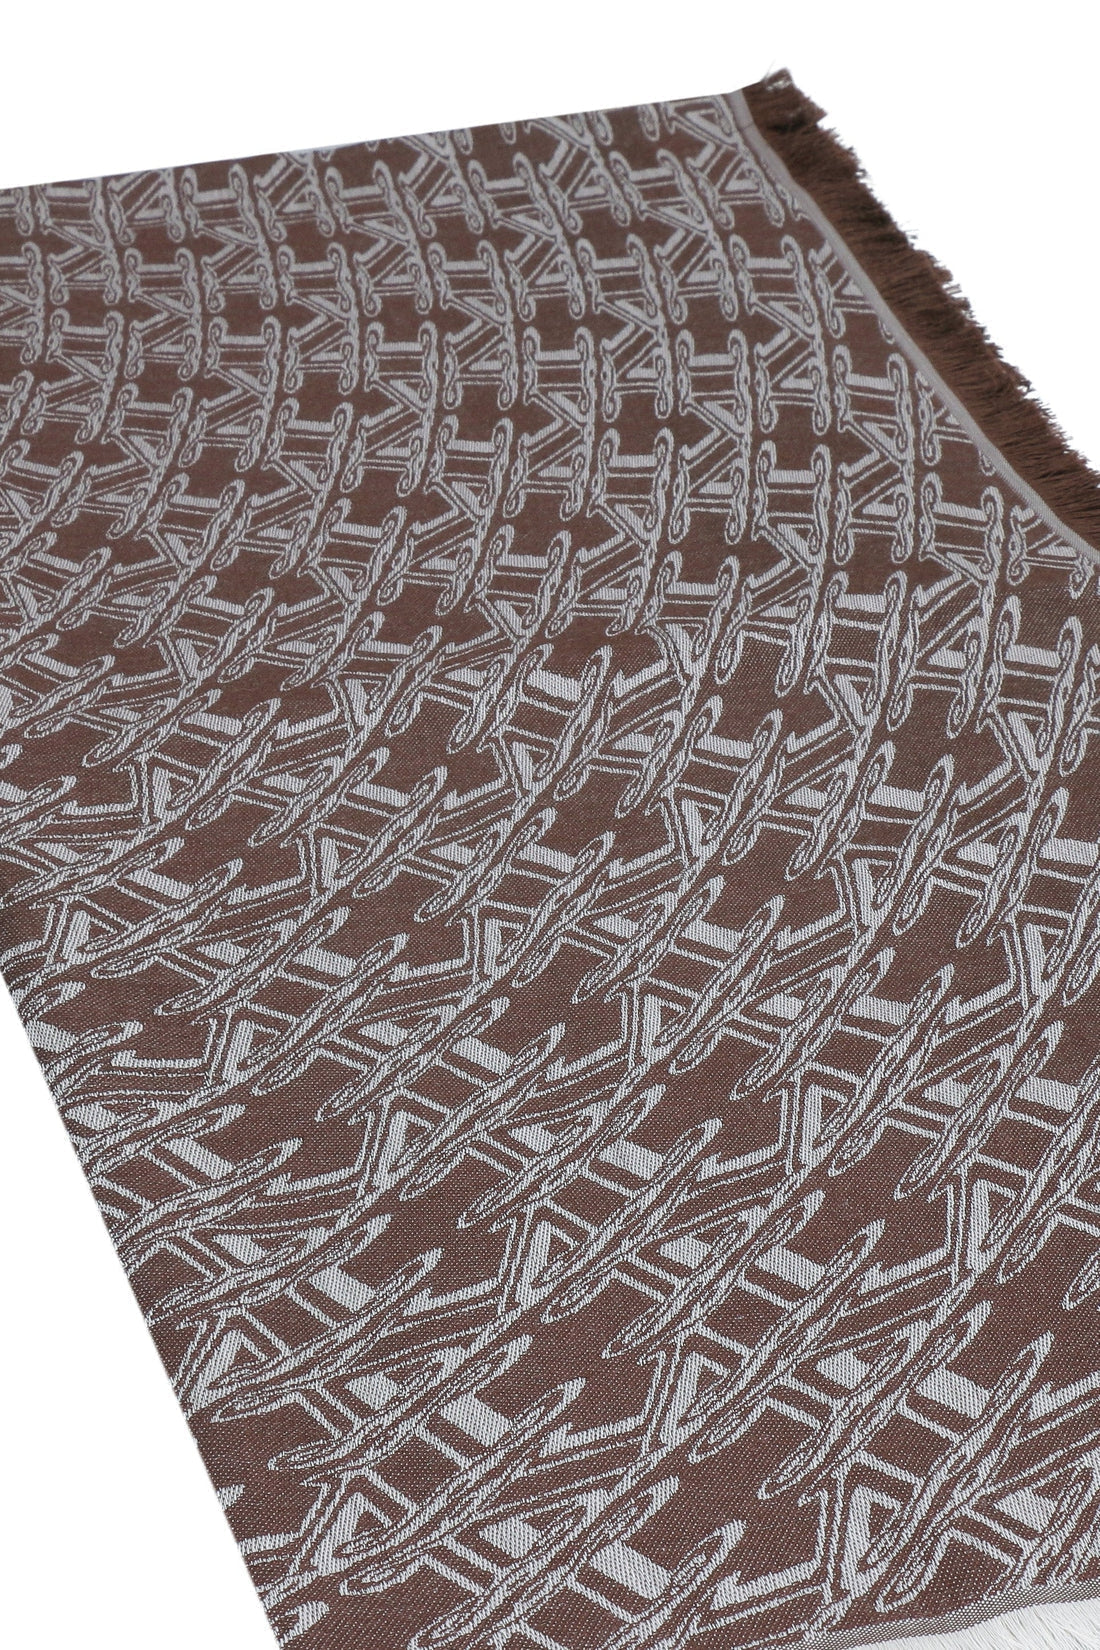 Max Mara-OUTLET-SALE-Silk and wool jacquard shawl-ARCHIVIST